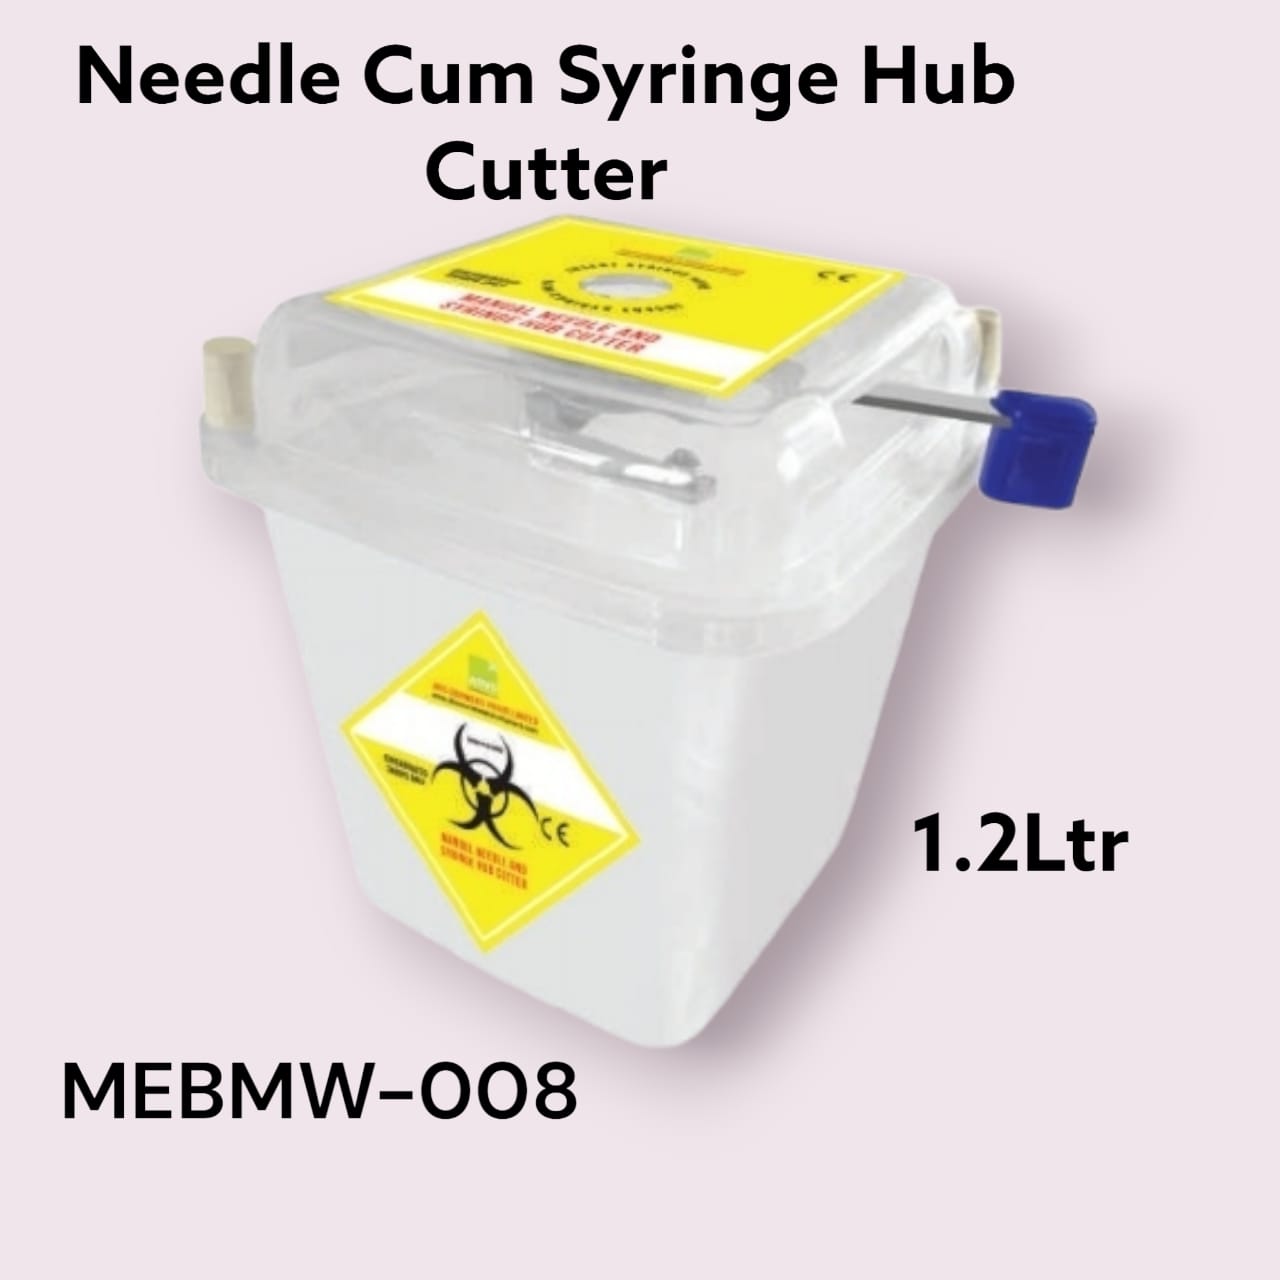 Needle Cum Syringe
Hub Cutter